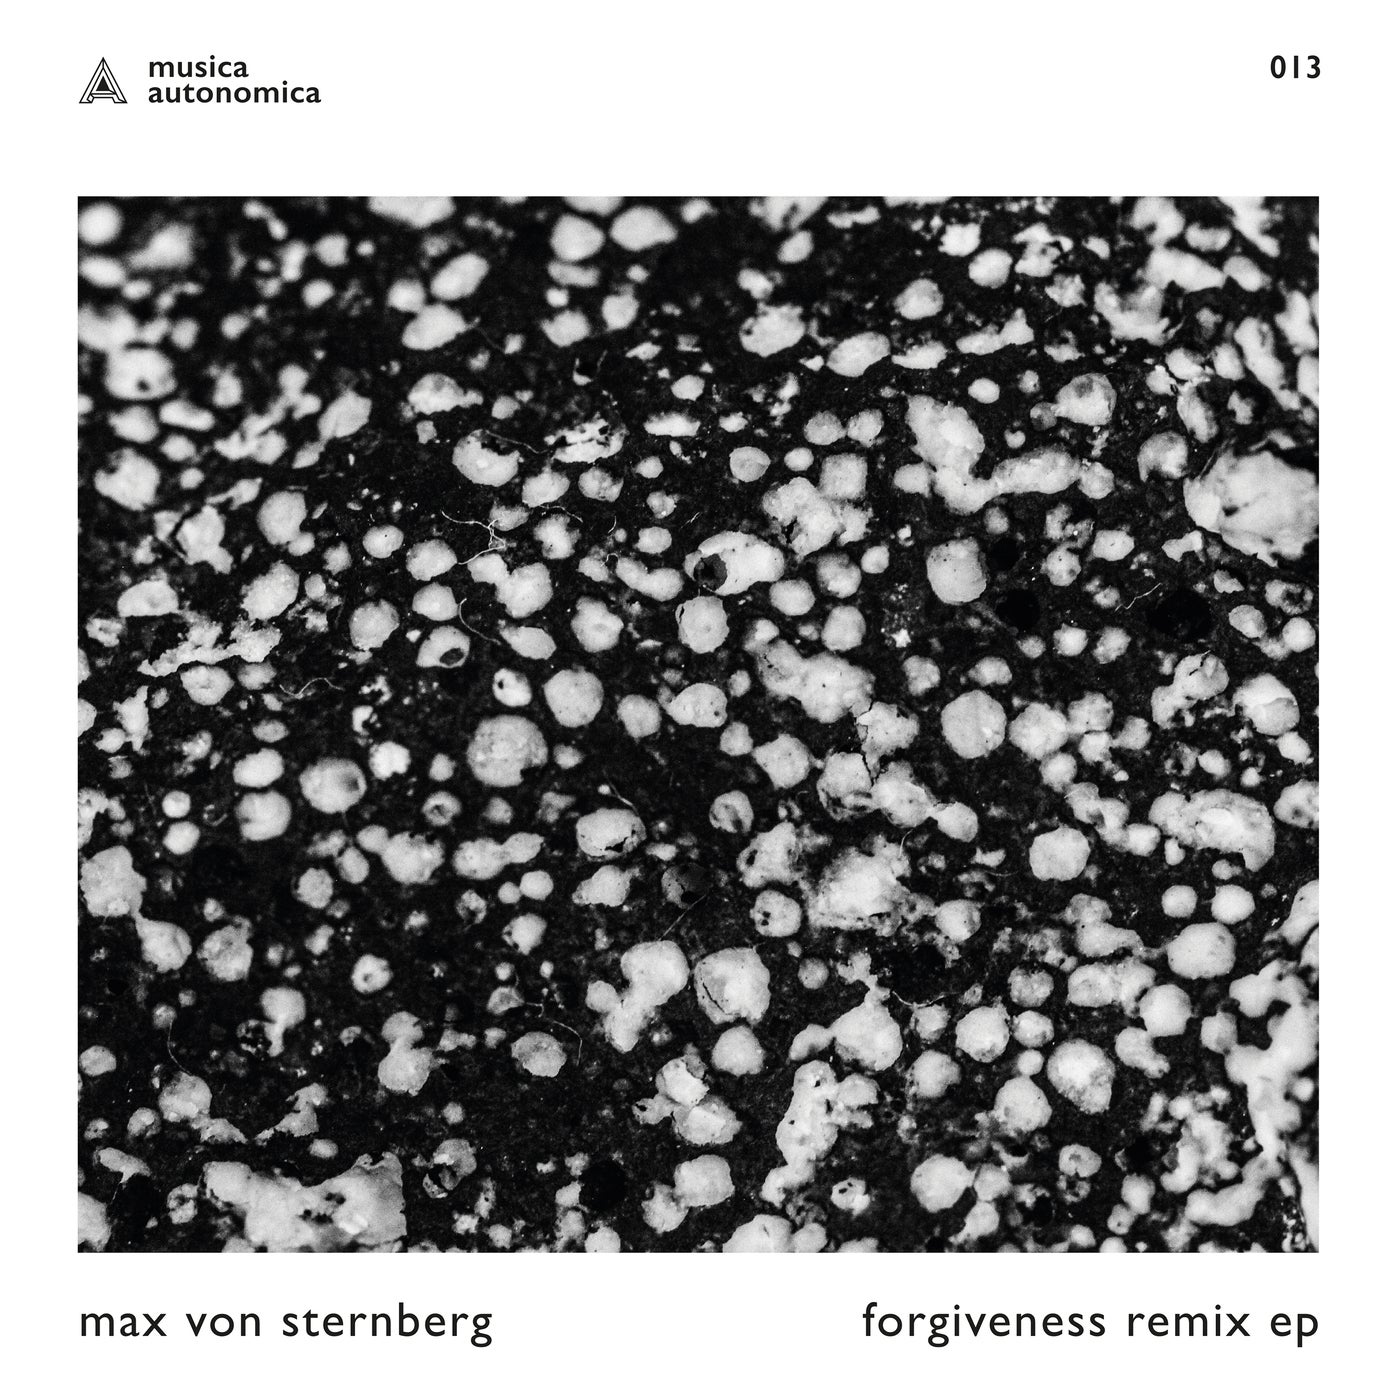 Max von Sternberg - Forgiveness Remix EP [MAUT0133]